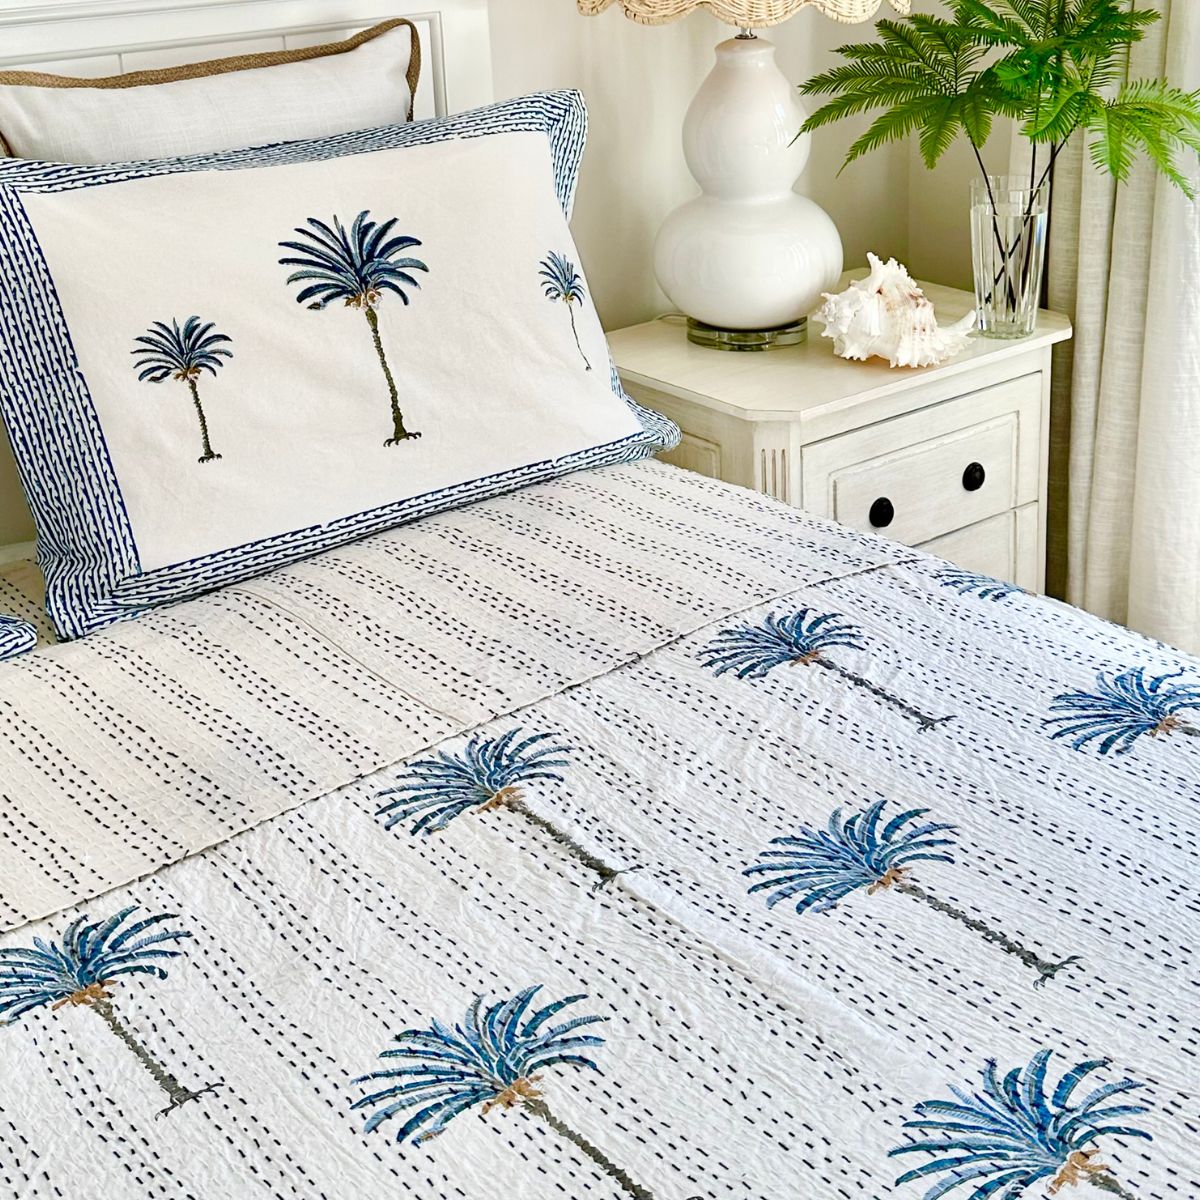 Blue Palms Kantha quilt/bedspread